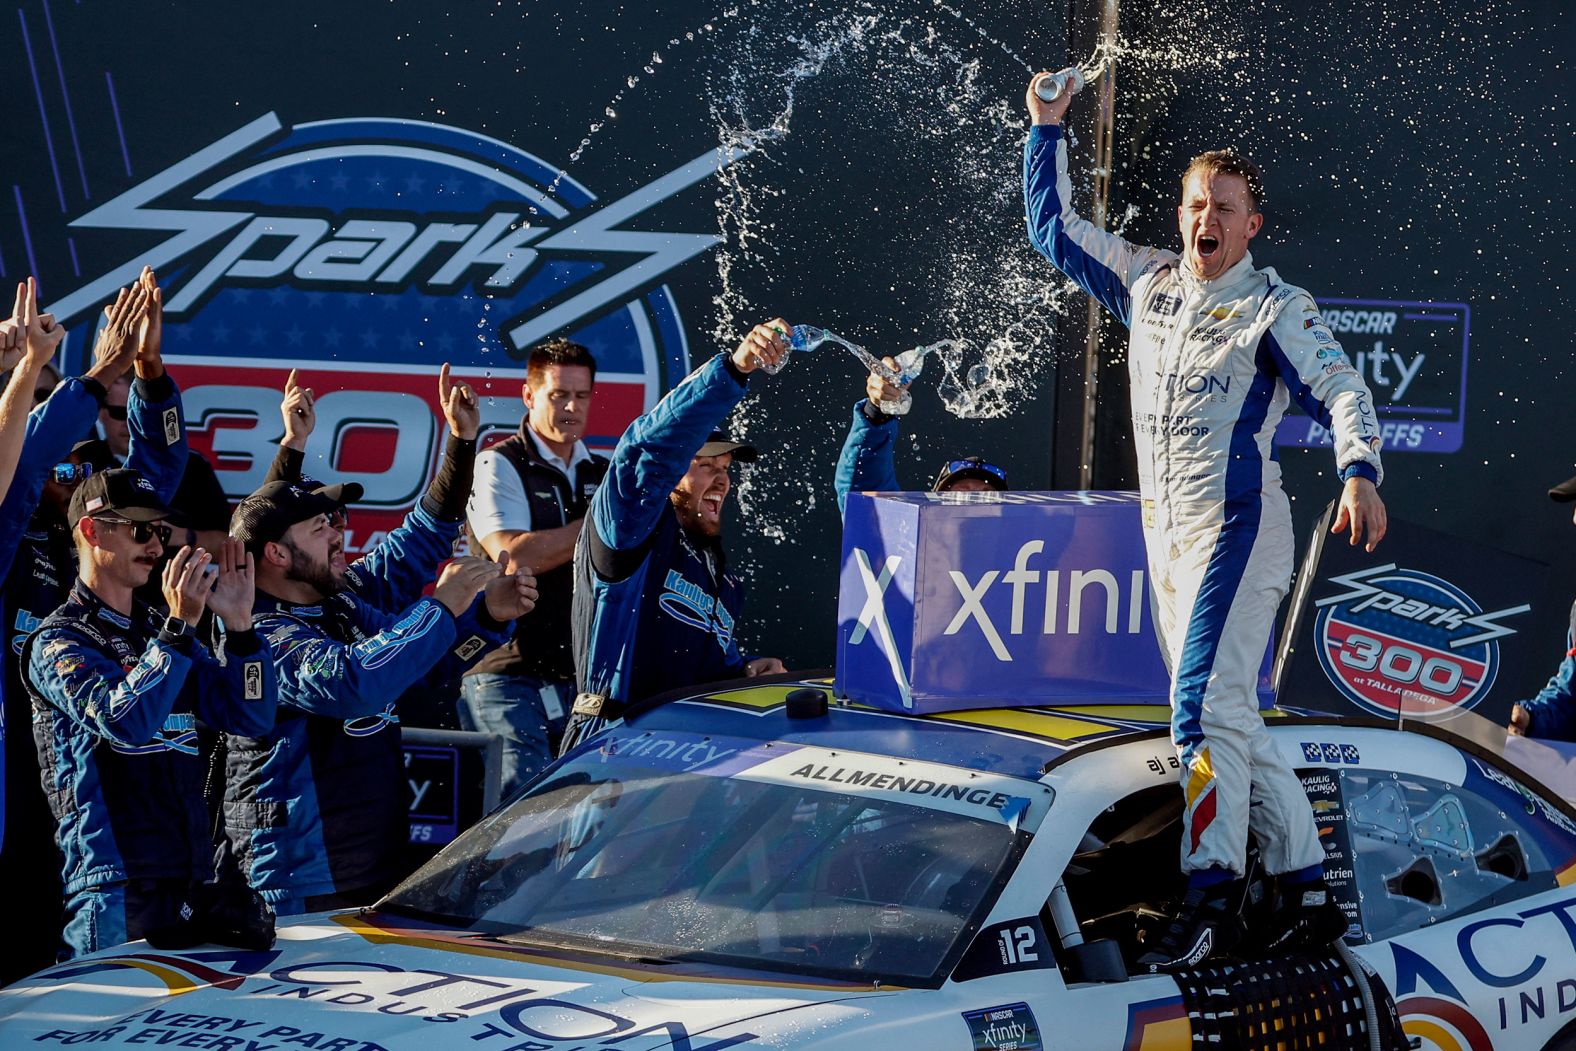 Driver AJ Allmendinger celebrates in Victory Lane after winning the NASCAR Xfinity Series race in Talladega, Alabama, on Saturday, October 1.